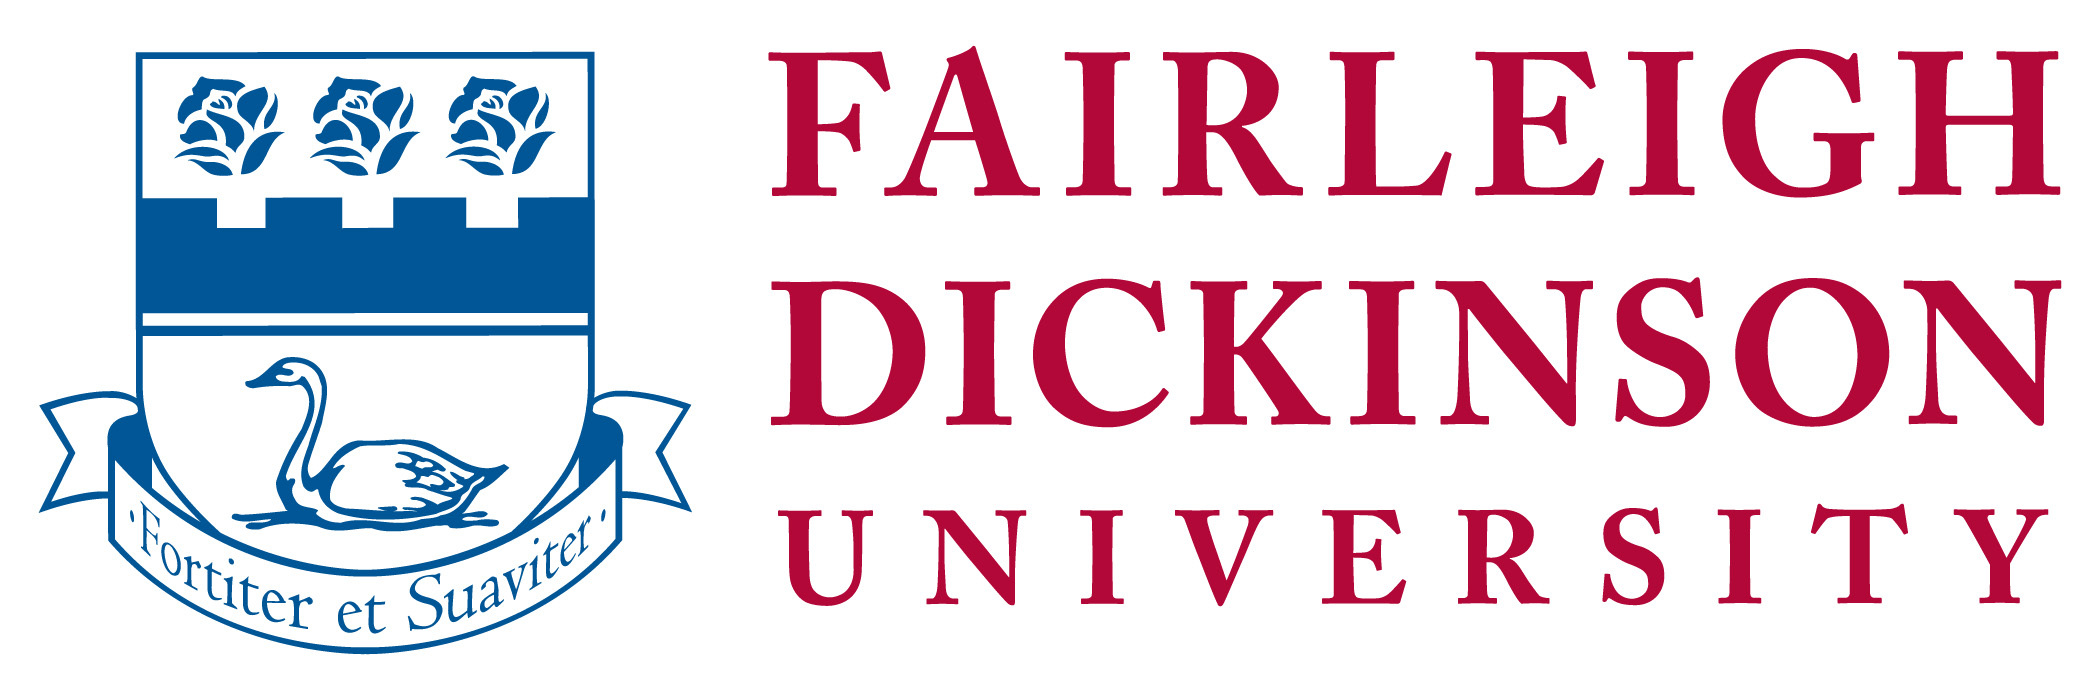 The logo of Fairleigh Dickinson University